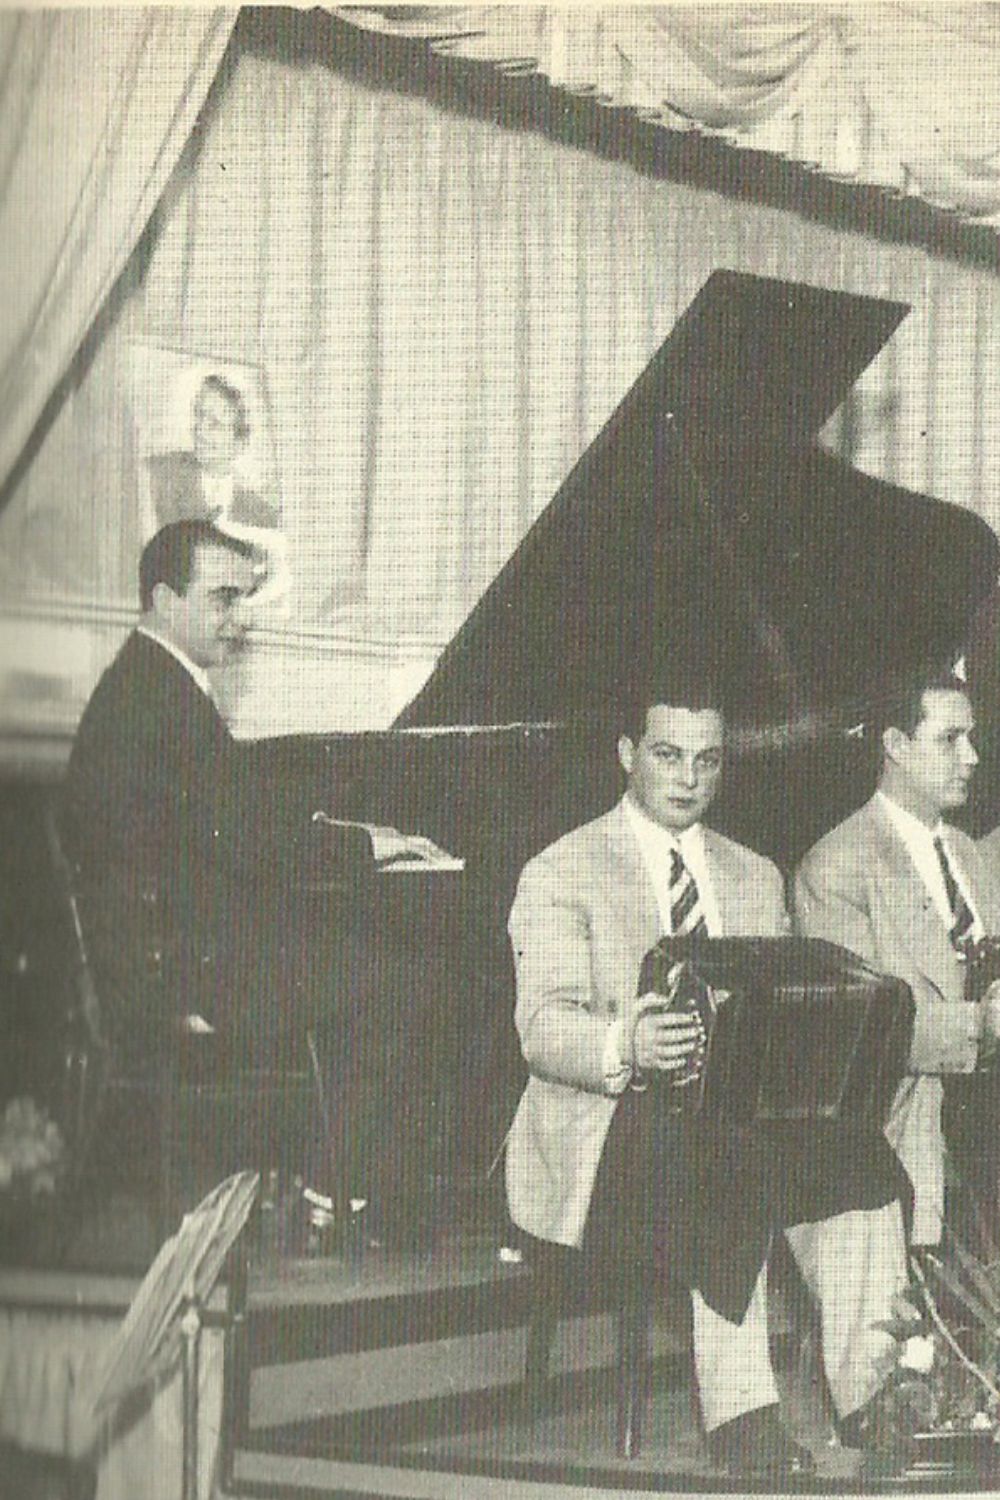 Lucio Demare y su Orquesta Típica. Argentine Tango music.